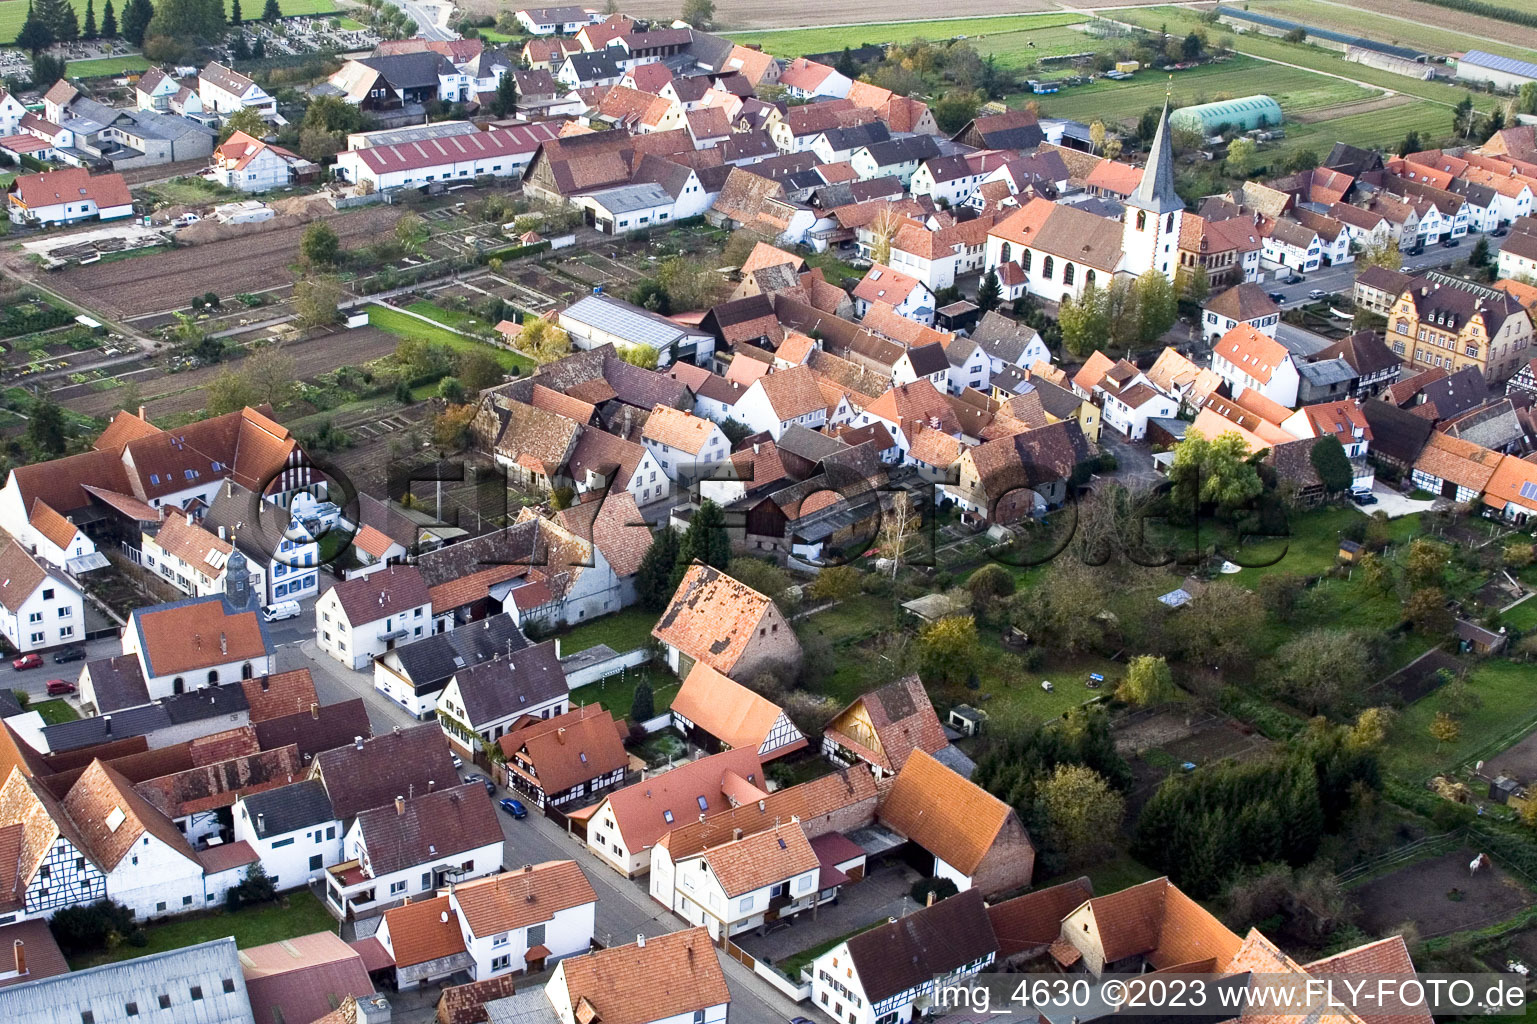 Ottersheim bei Landau in the state Rhineland-Palatinate, Germany from above